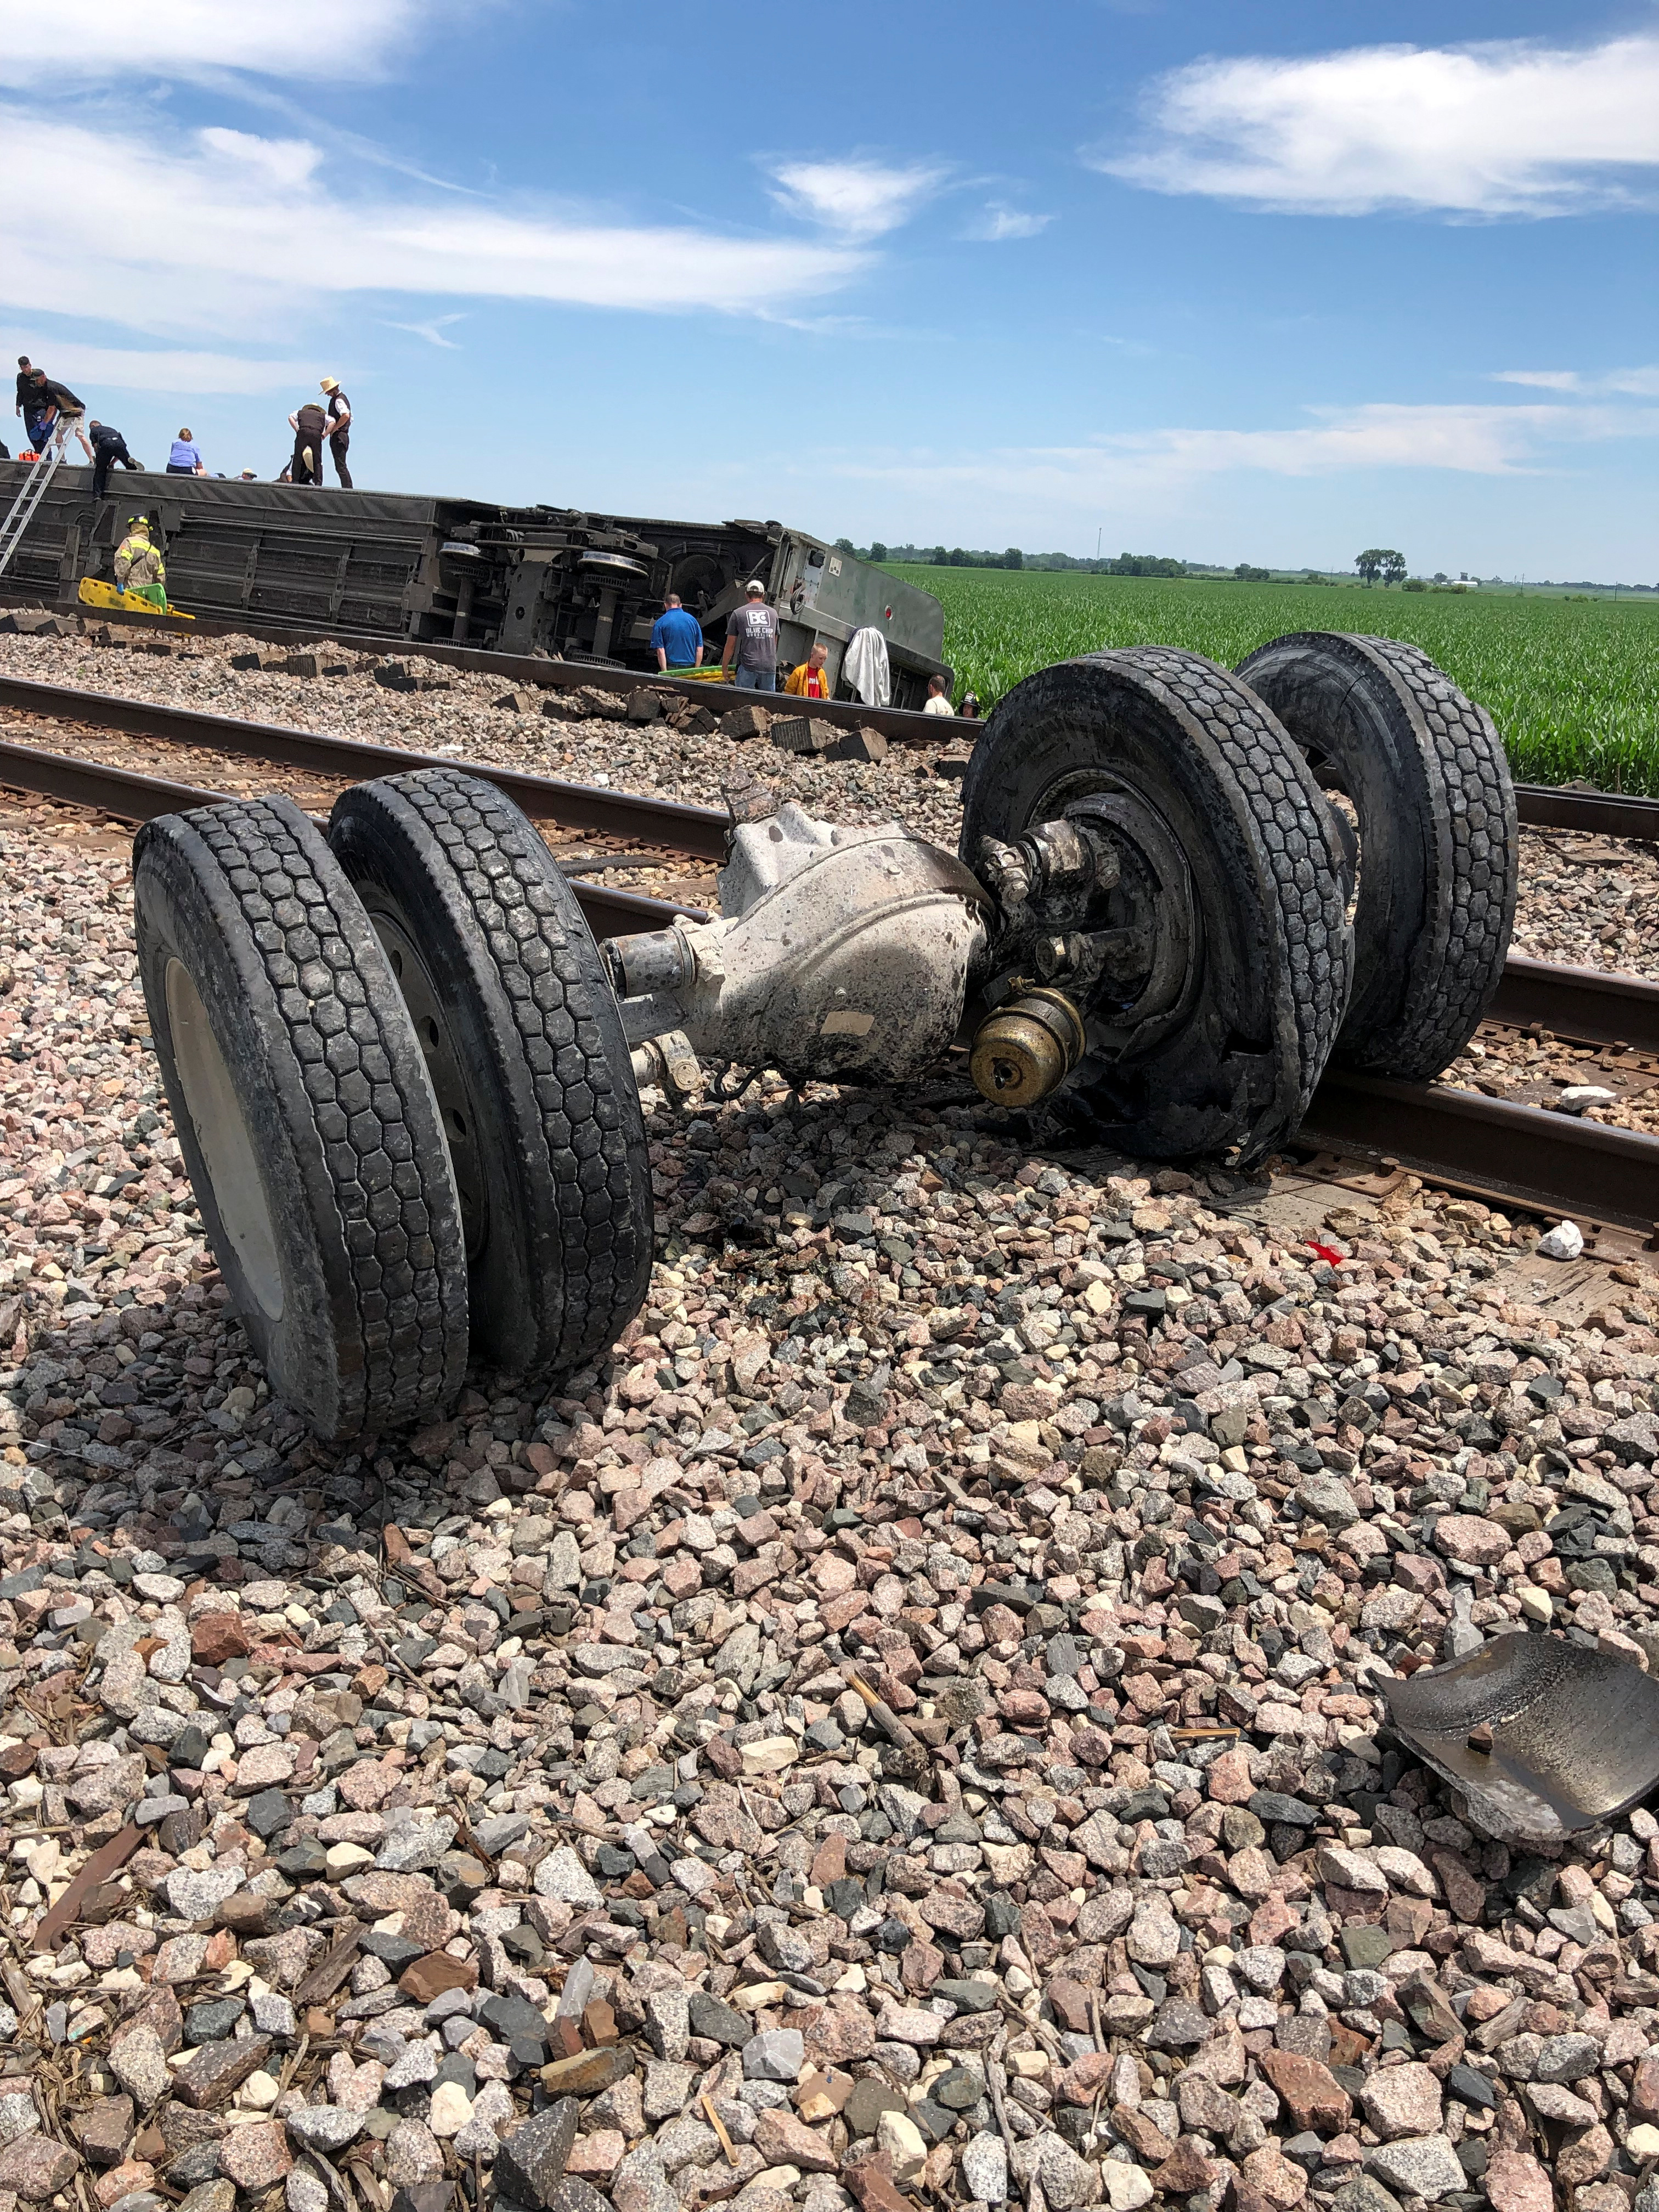 Amtrak train crash and derailment in Missouri